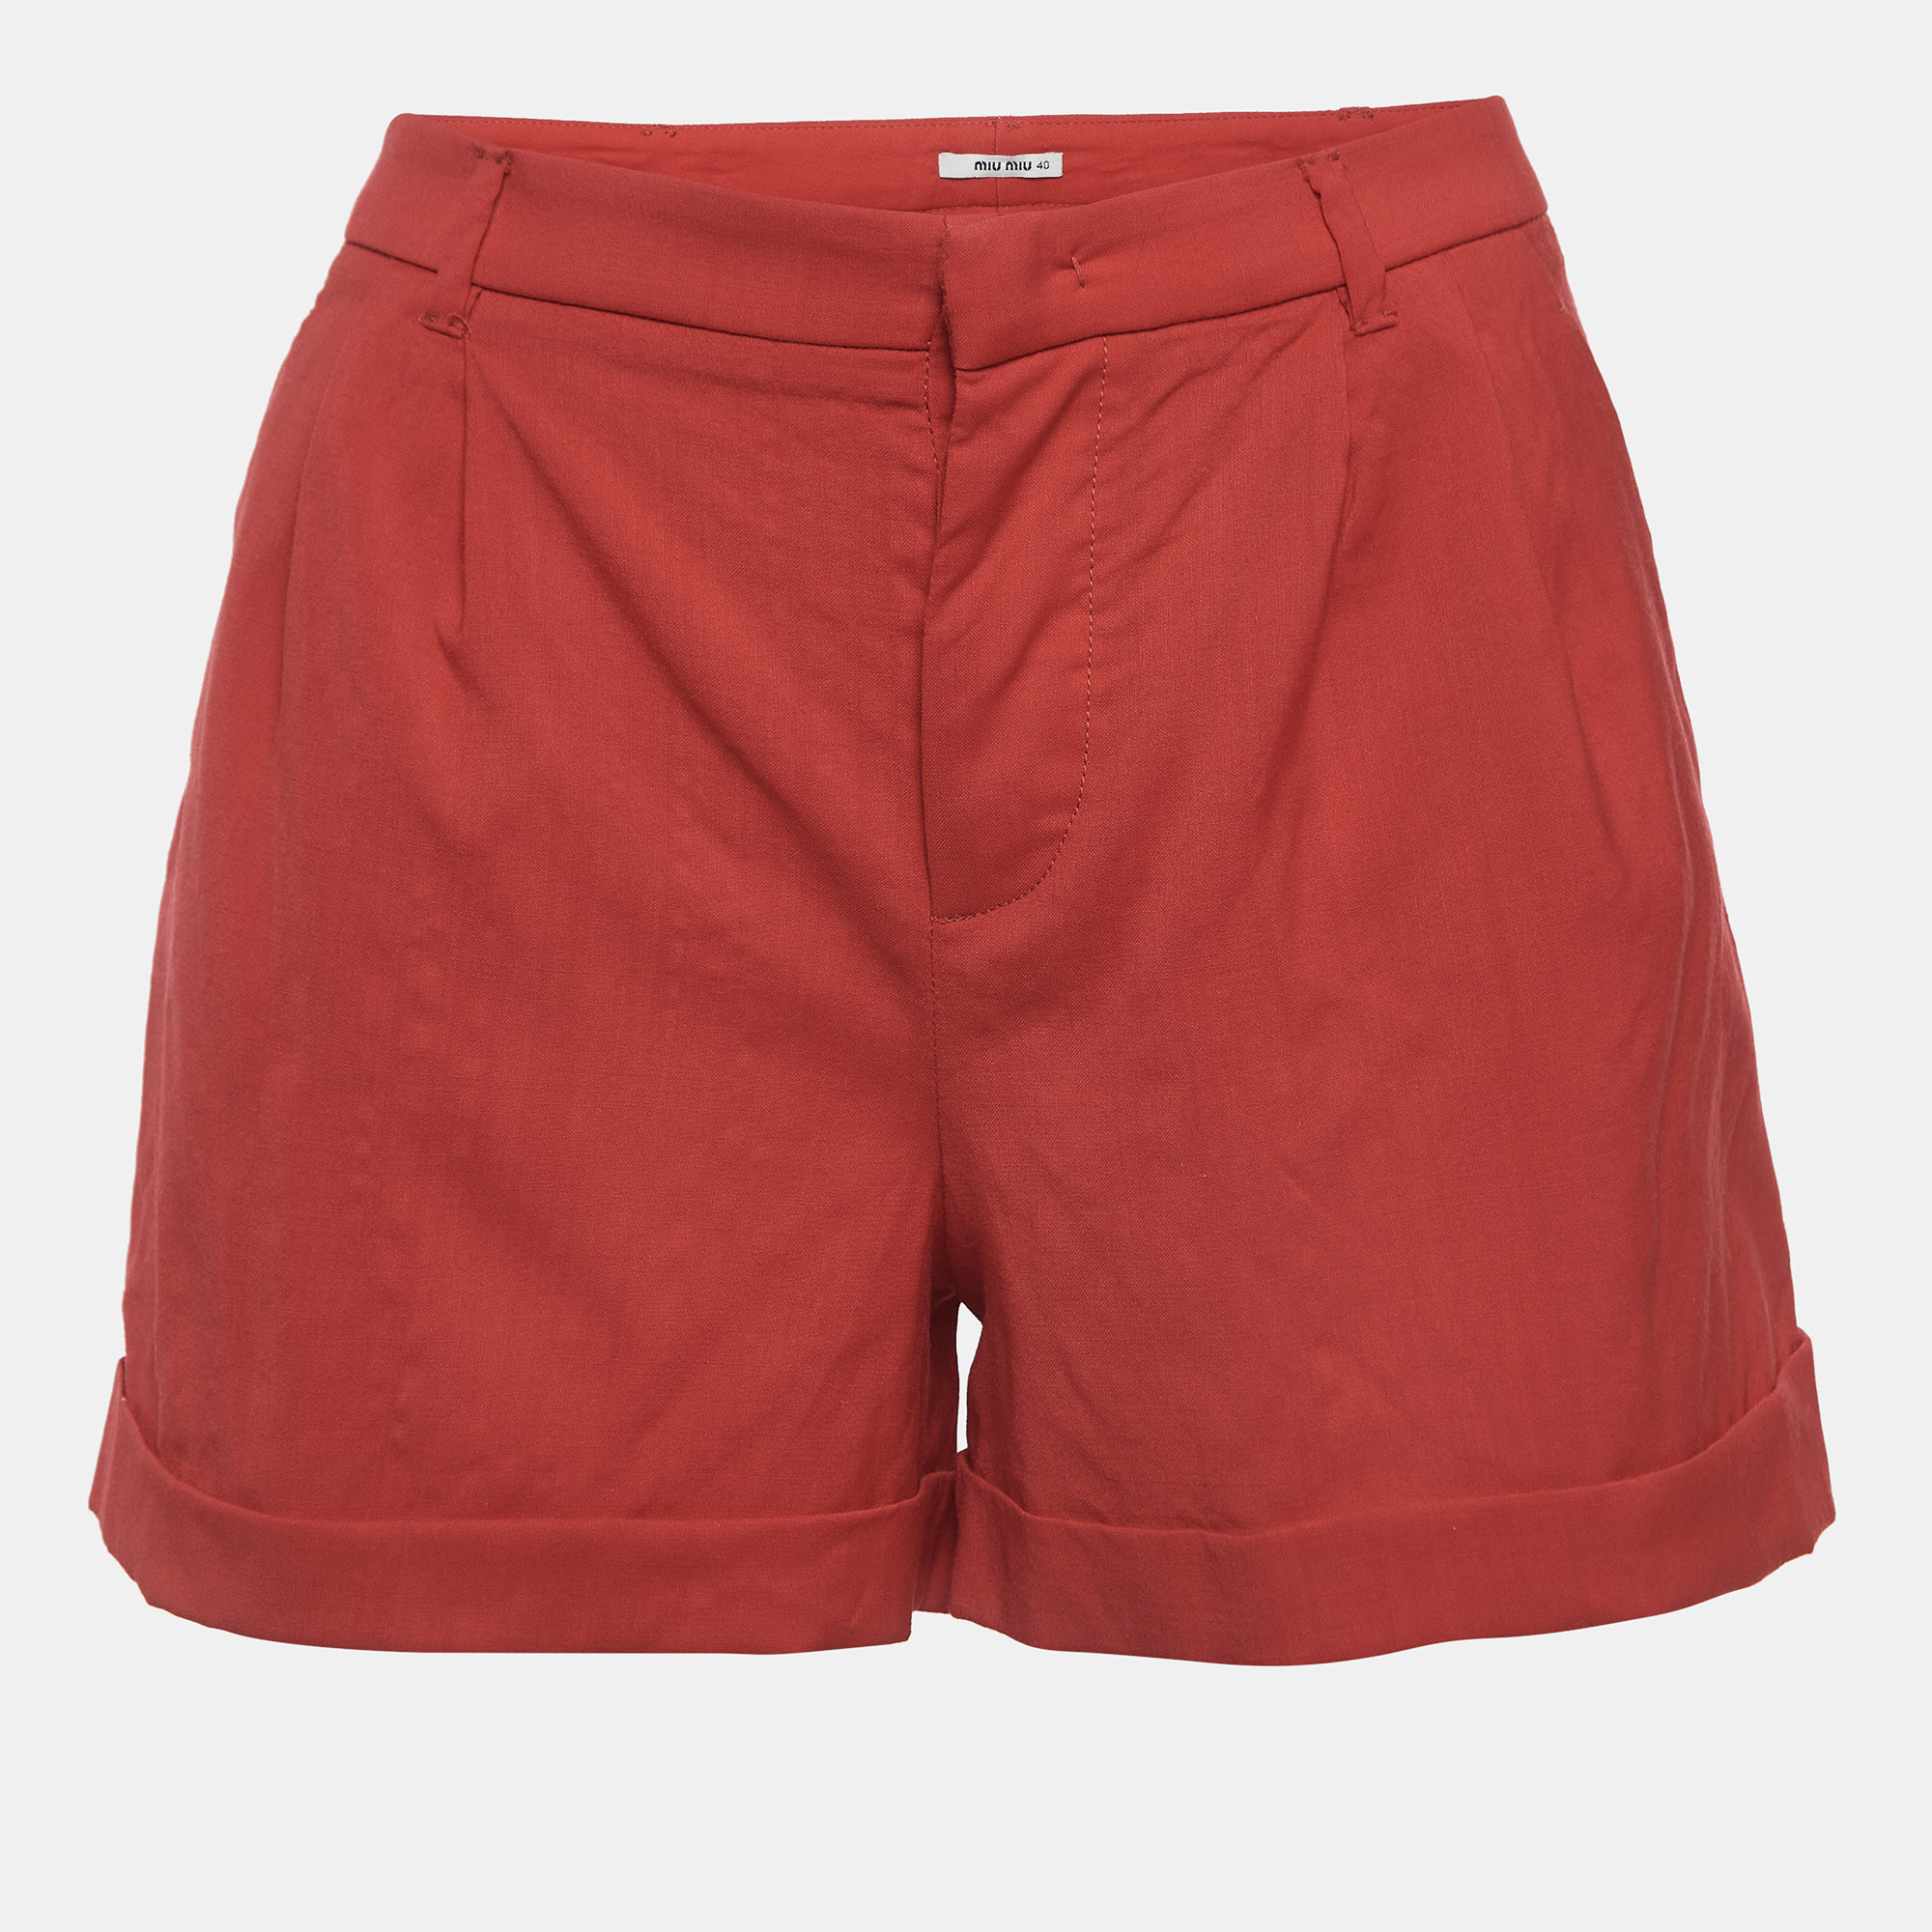 Miu miu red wool buttoned shorts s